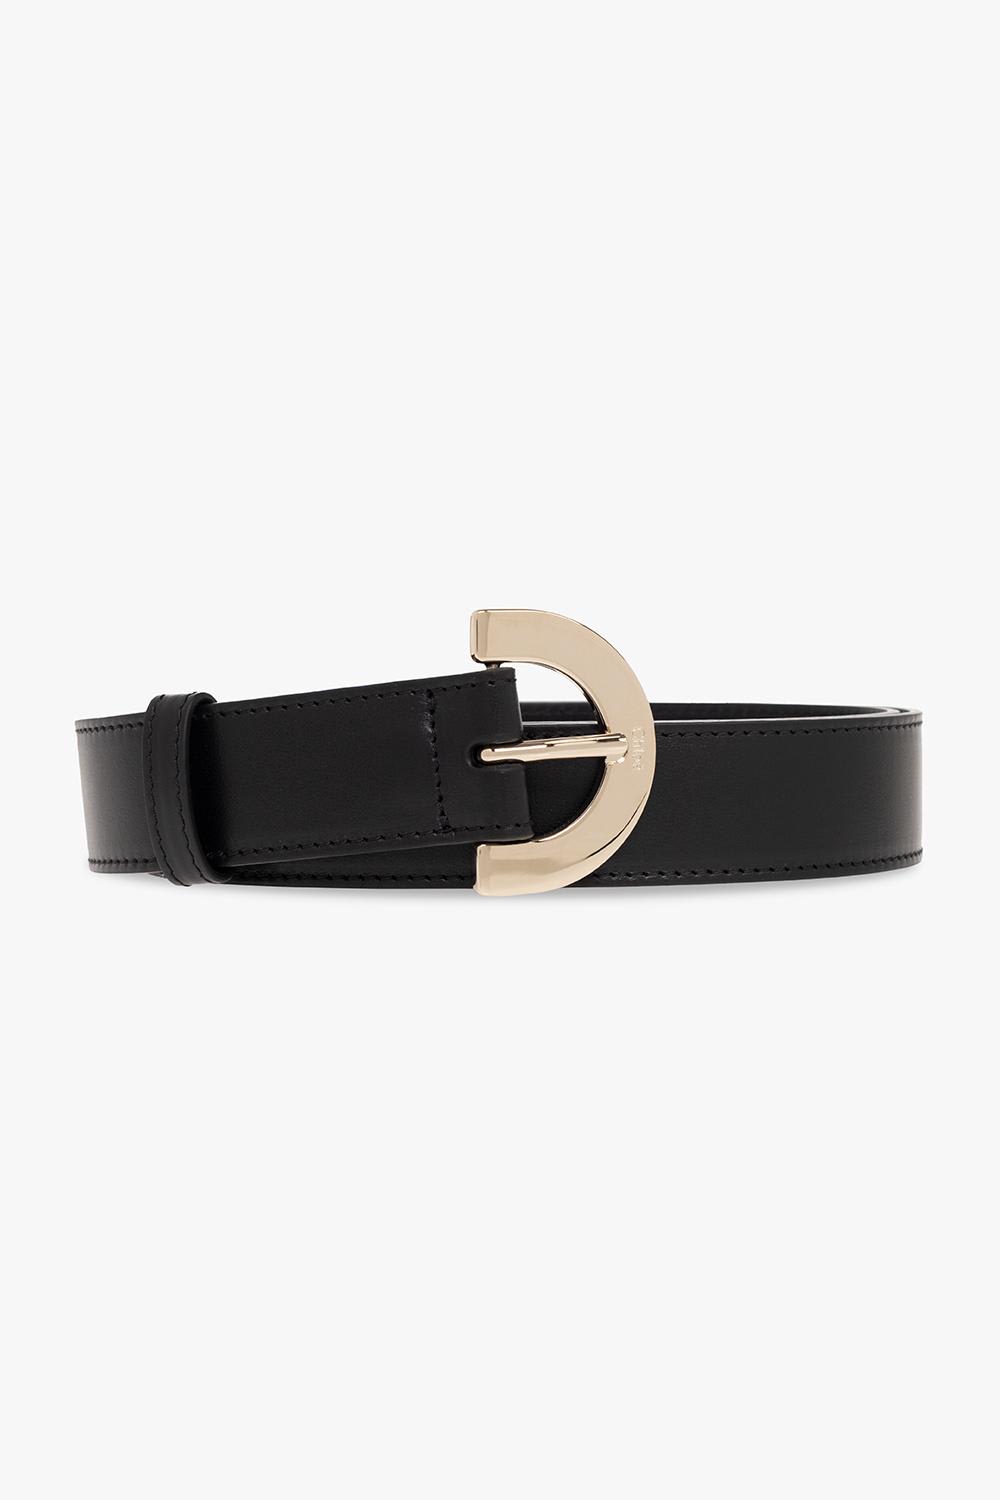 Chloé Leather Belt